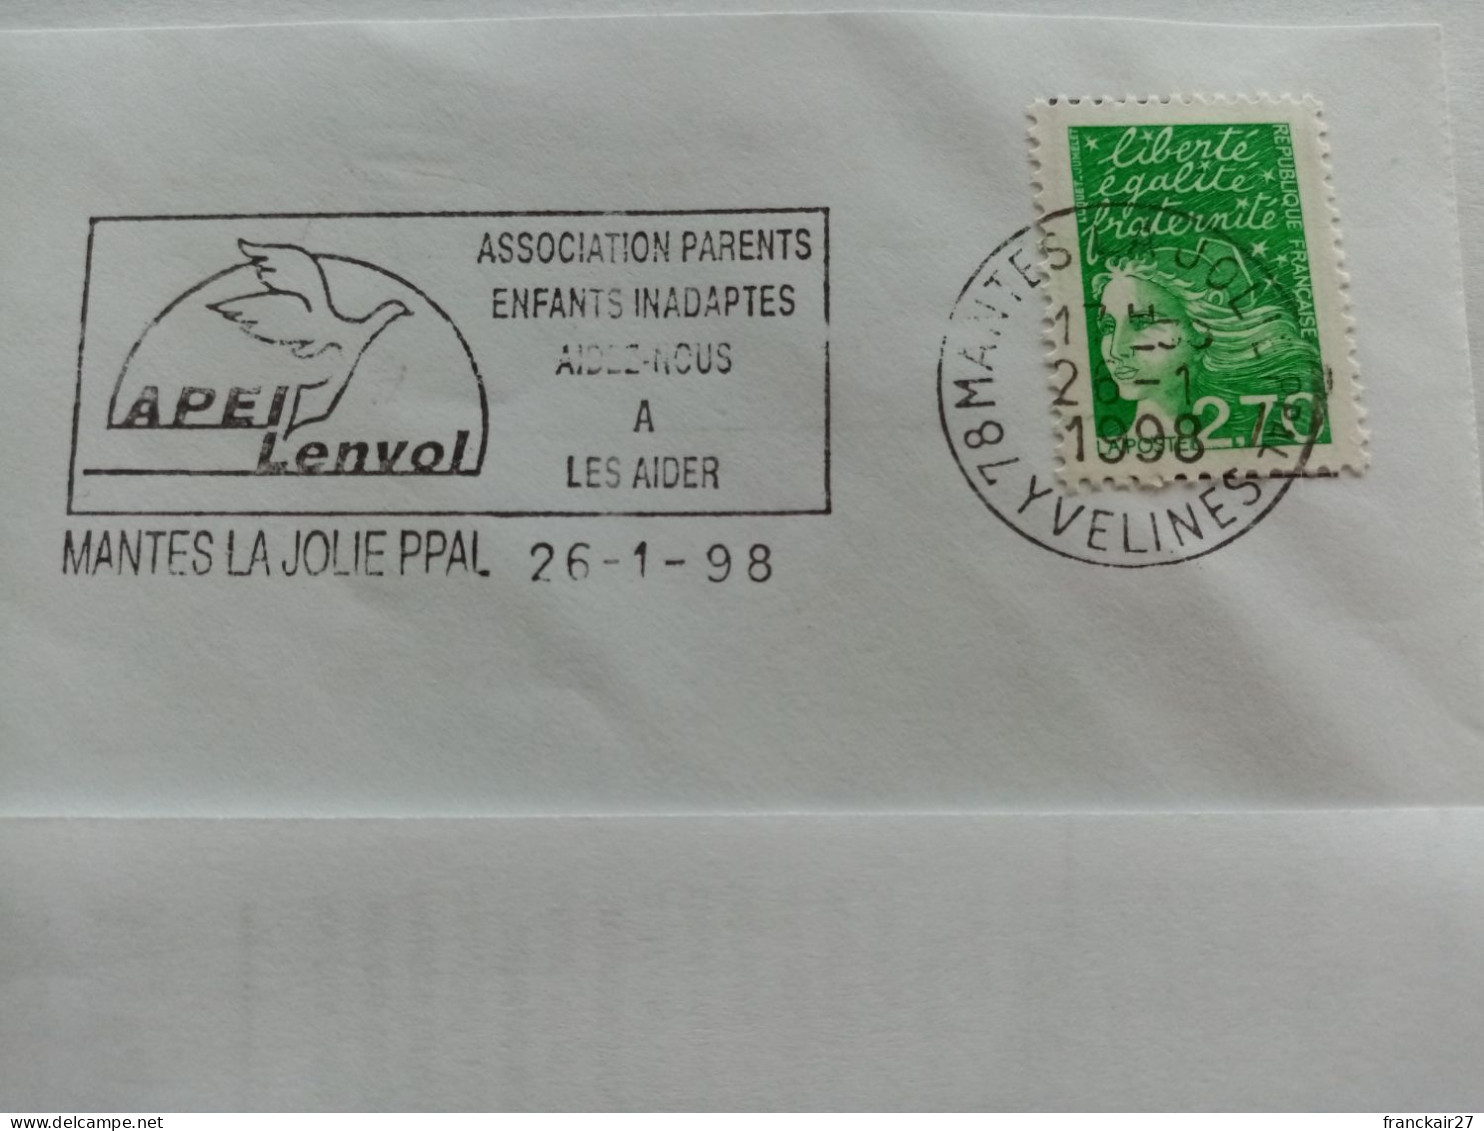 Mantes La Jolie Ppal, APEI, L'envol - Mechanical Postmarks (Advertisement)